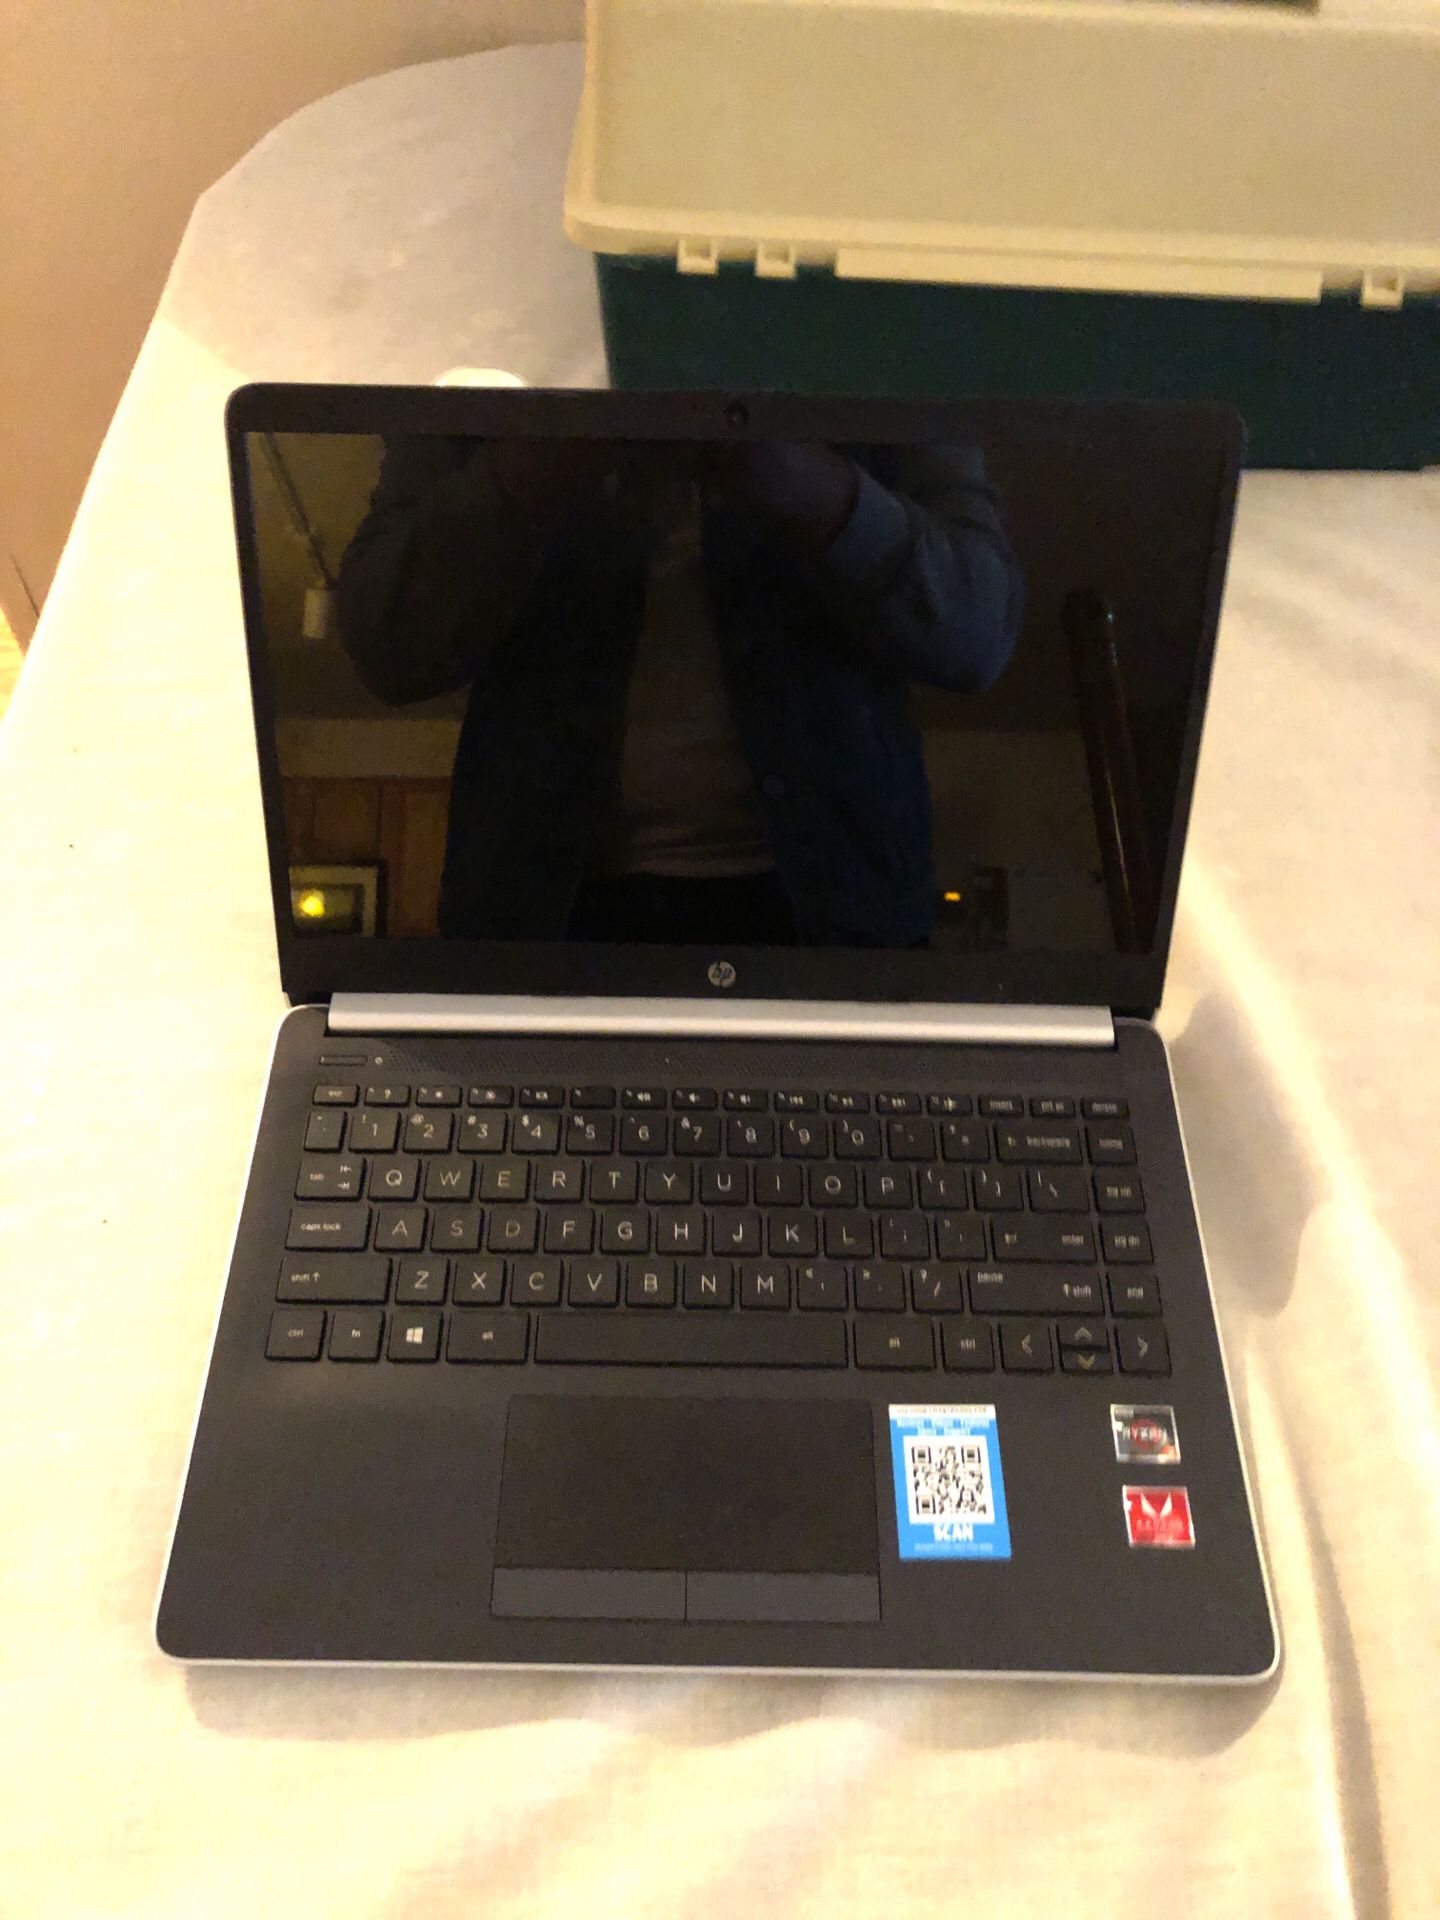 HP laptop with ryzen 3 processor and Radeon Vega graphics